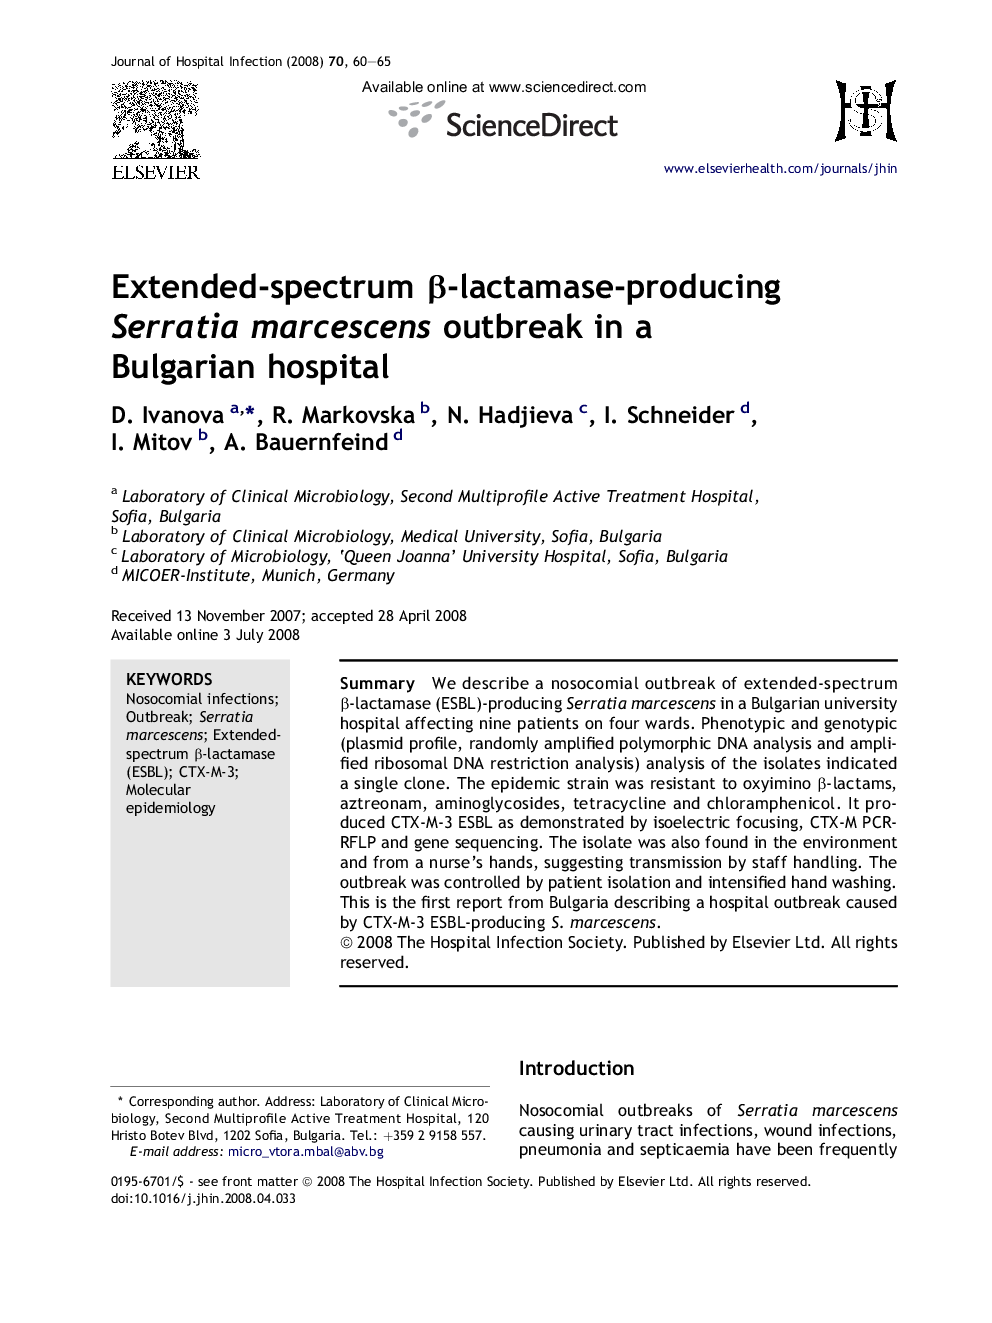 Extended-spectrum β-lactamase-producing Serratia marcescens outbreak in a Bulgarian hospital